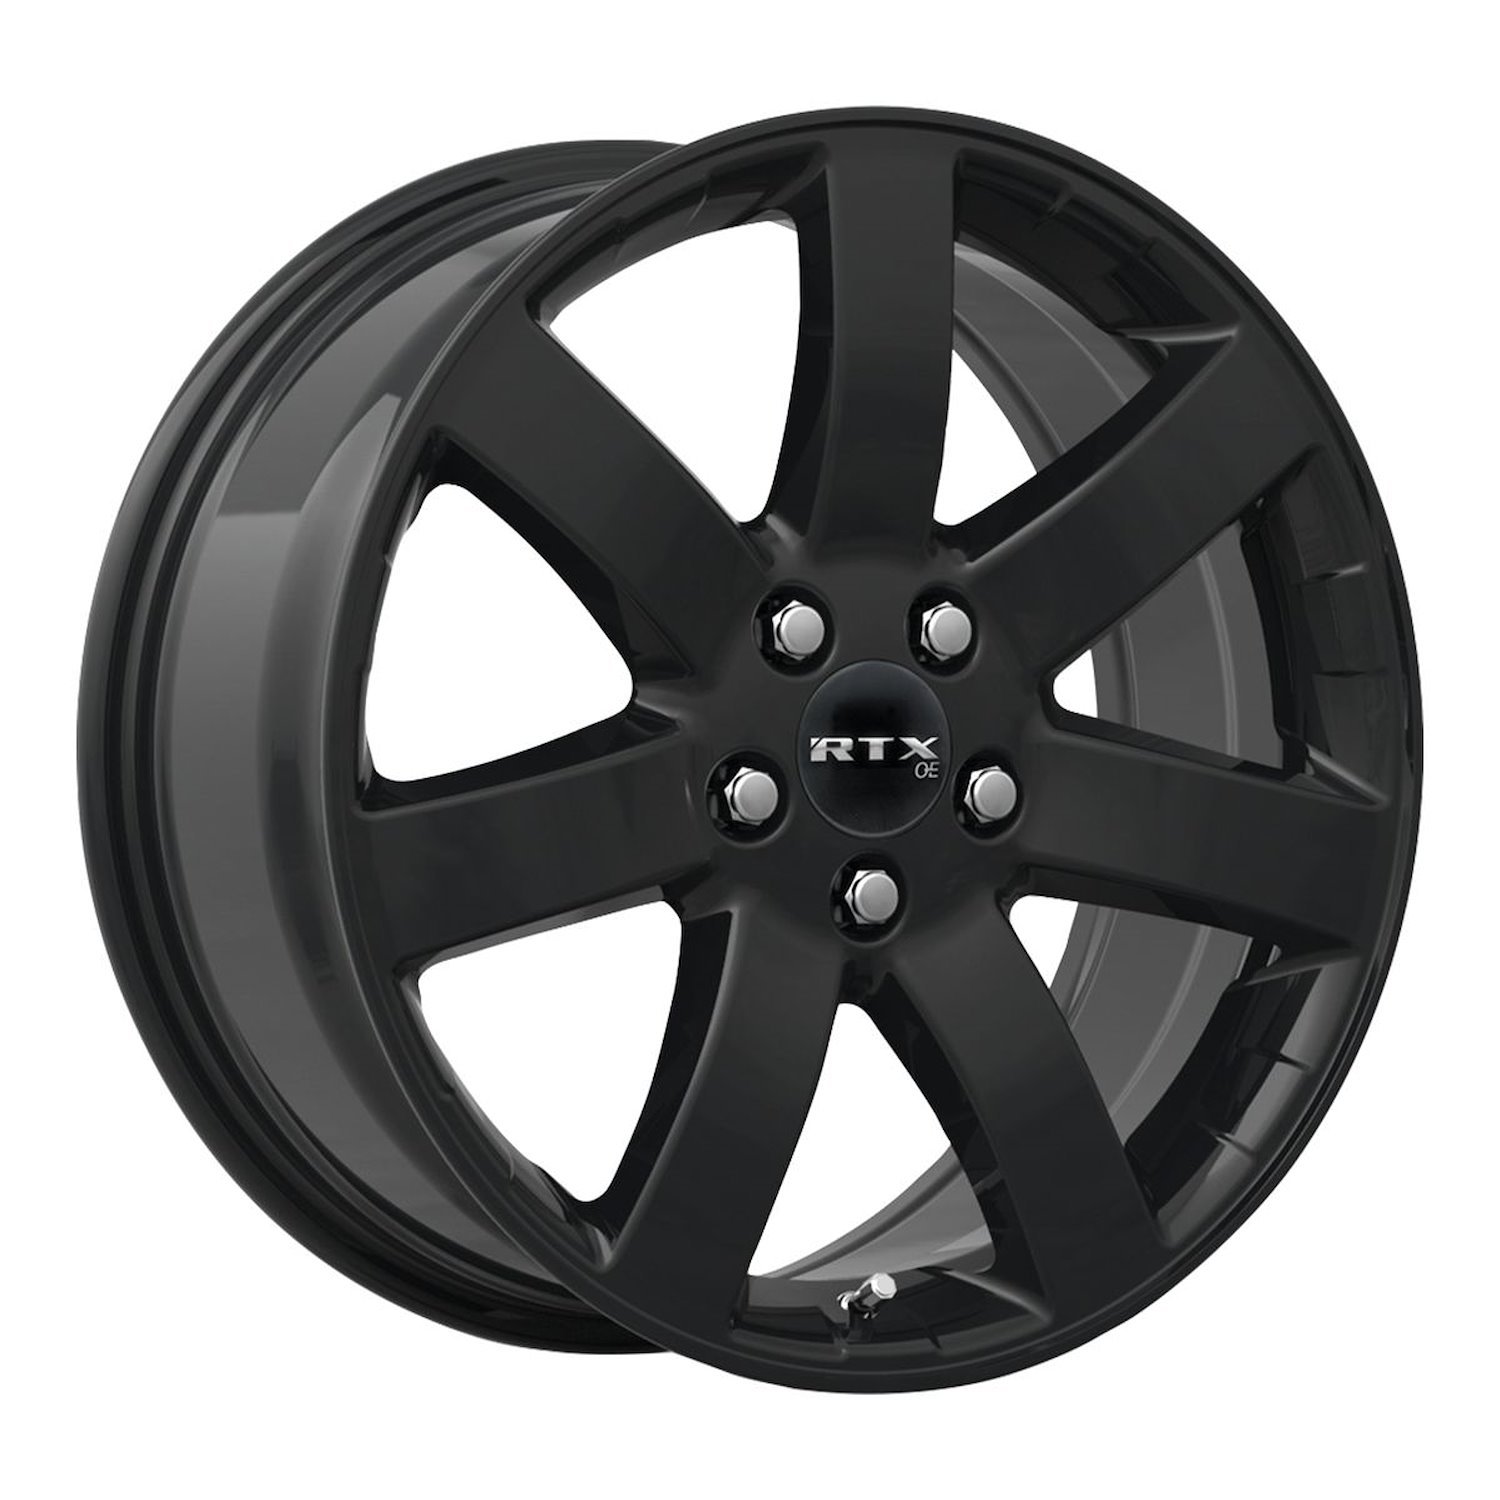 082838 OE-Series Nagano Wheel [Size: 17" x 7.50"] Gloss Black Finish